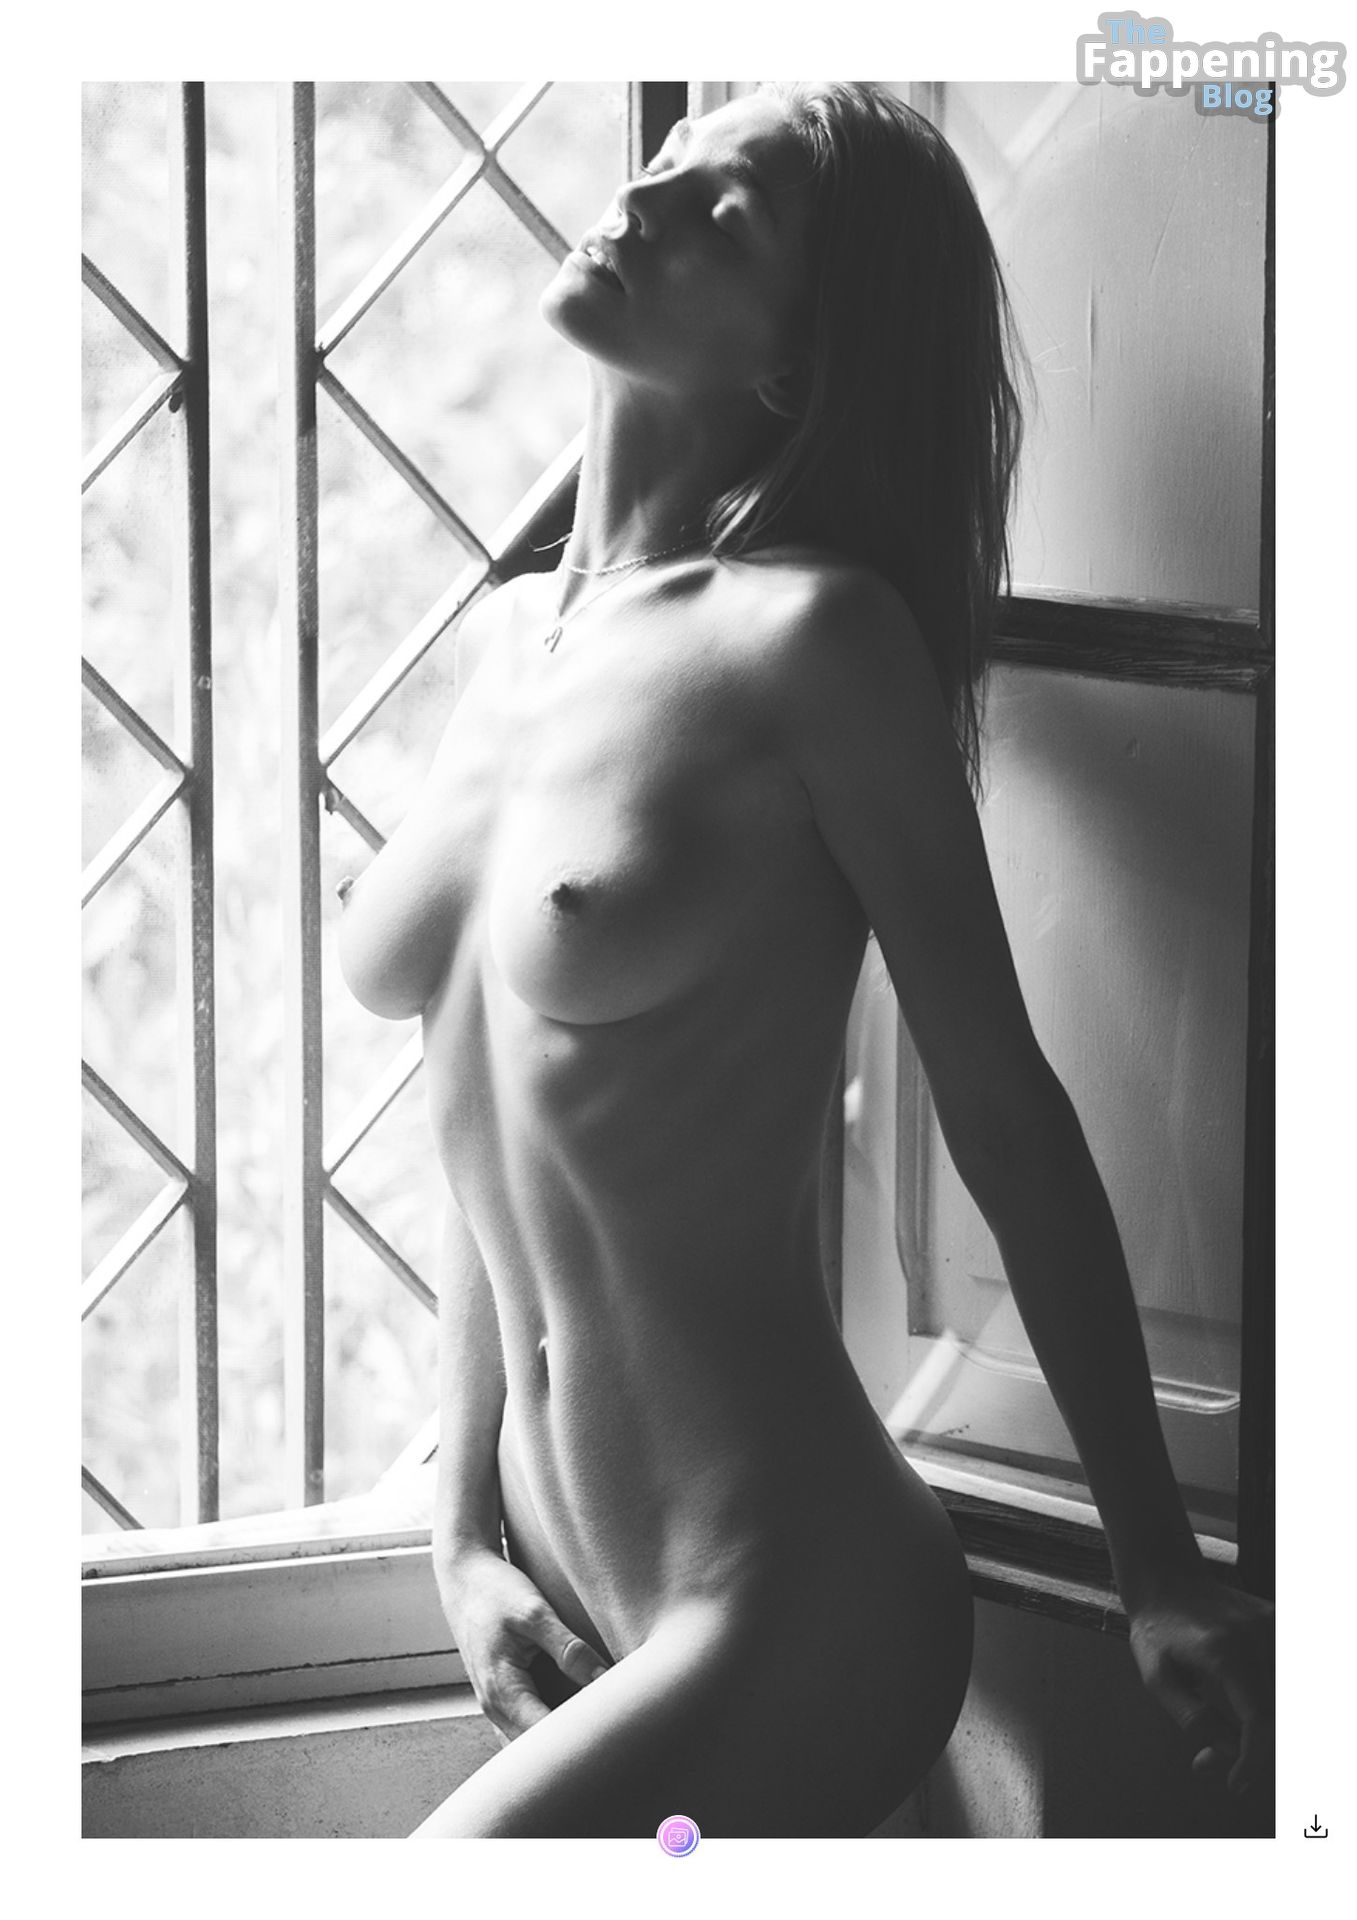 Samantha-Gradoville-Nude-21-The-Fappening-Blog.jpg